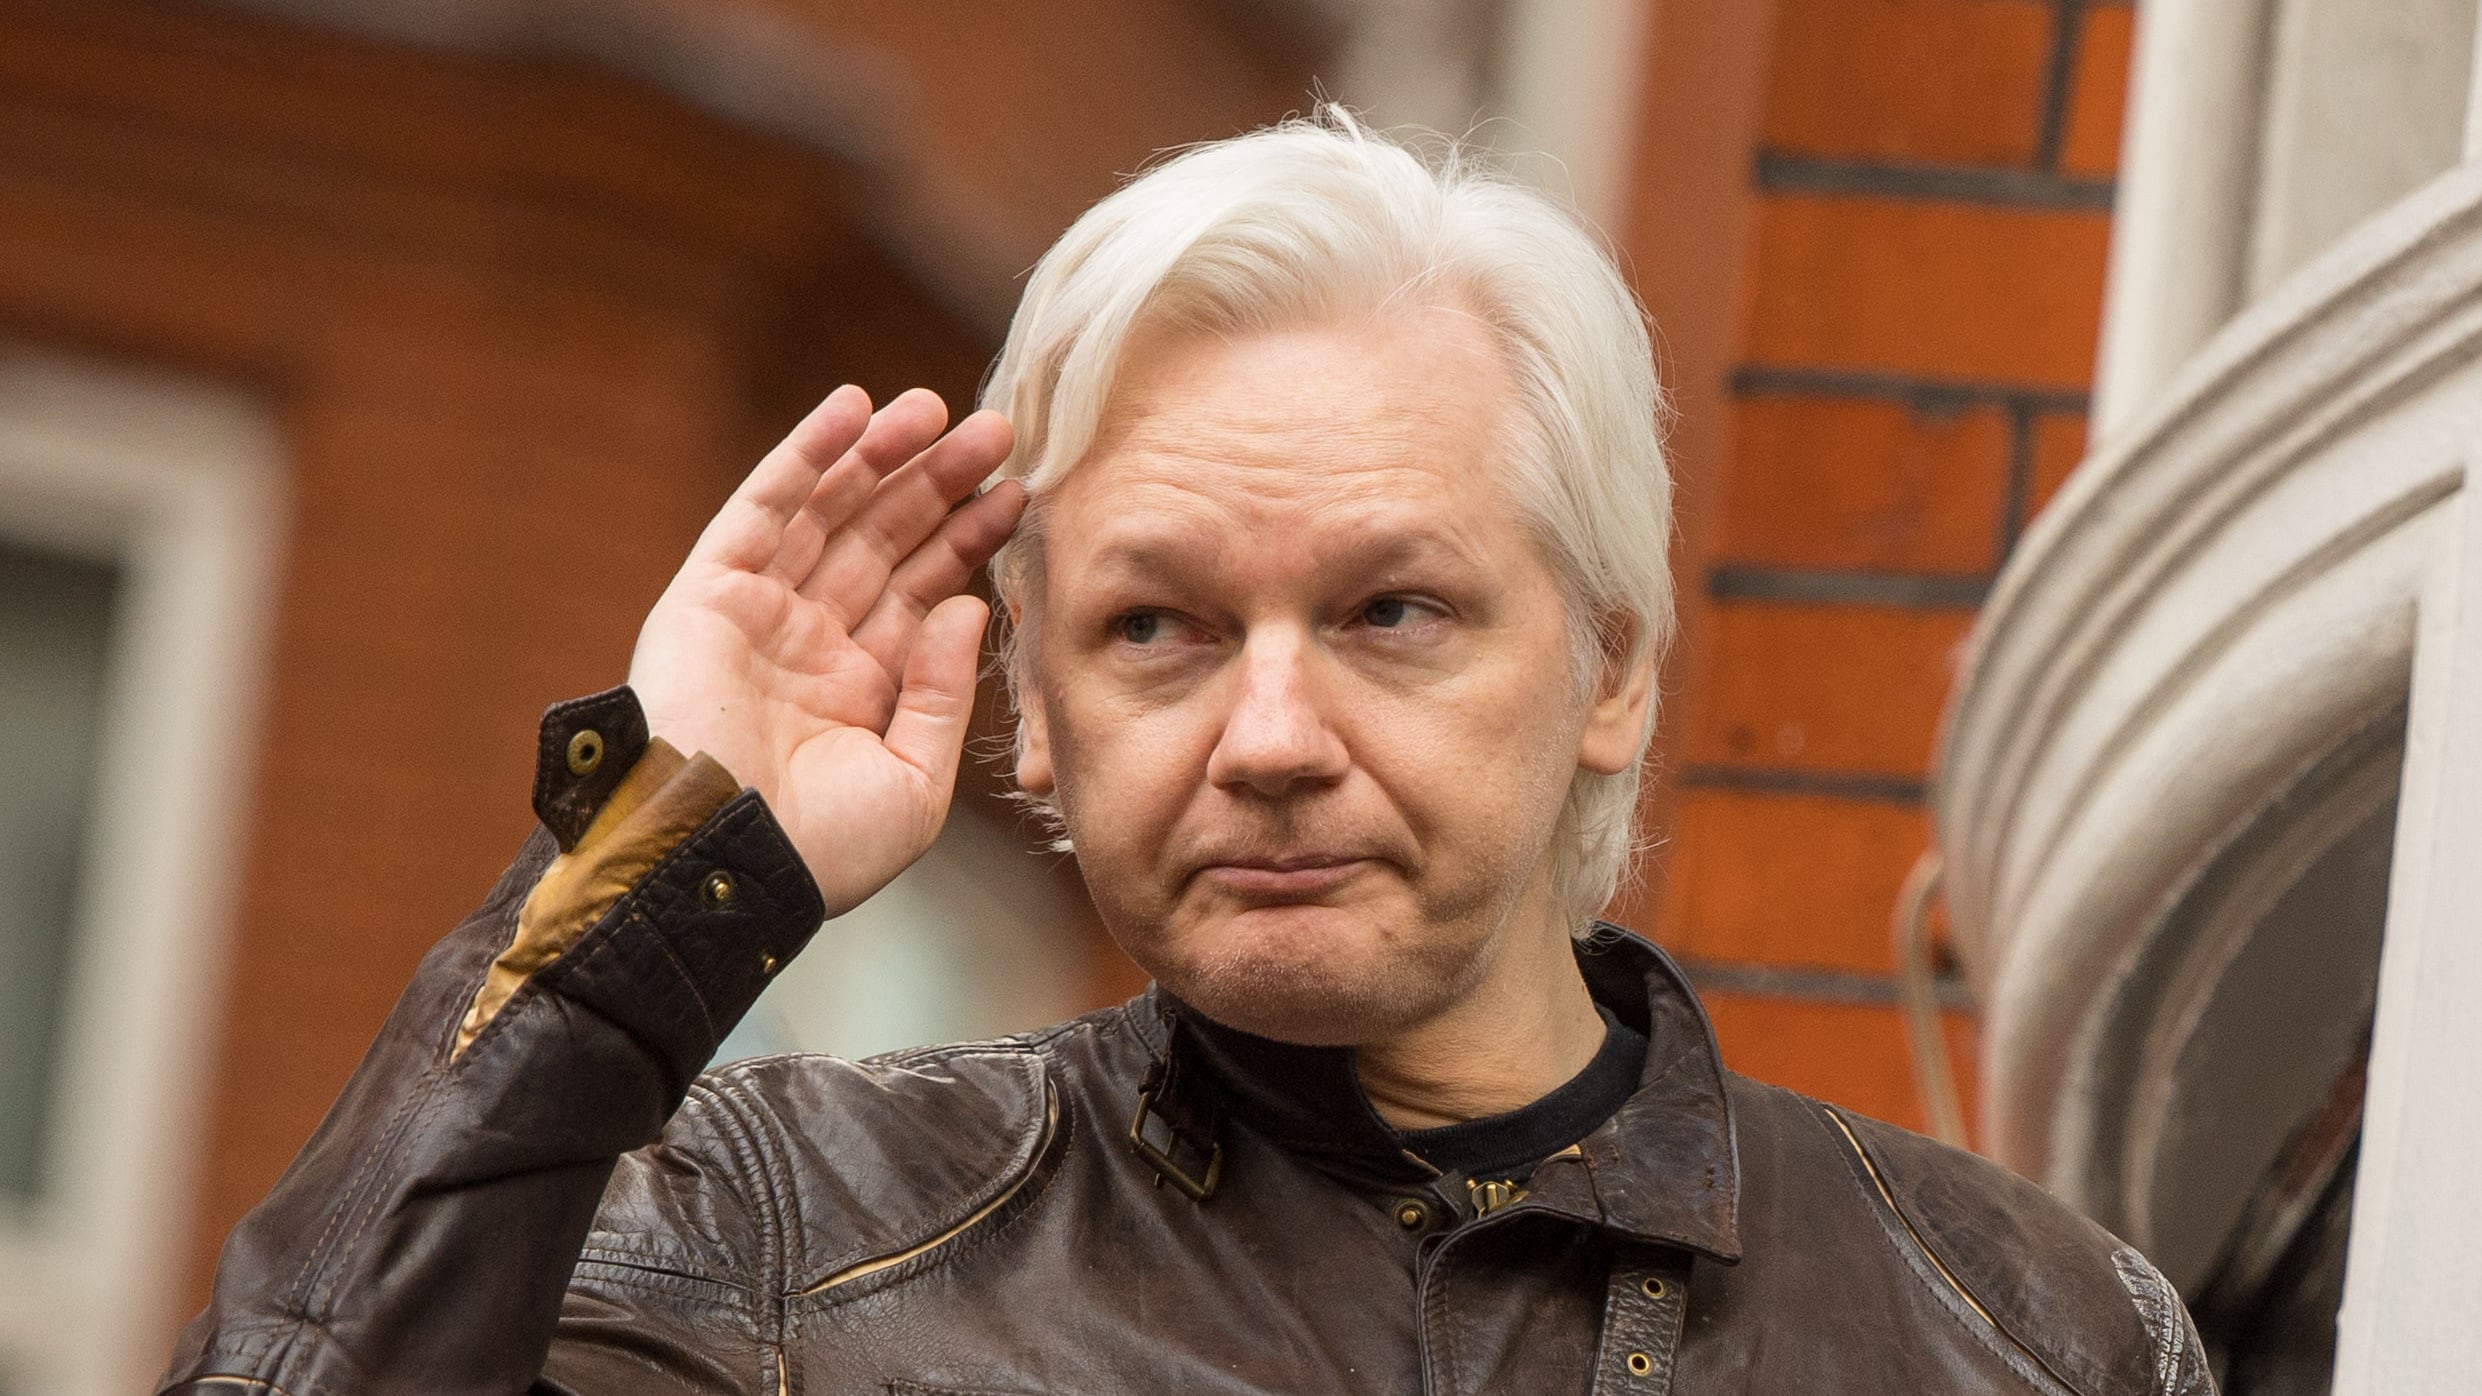 Julian Assange has left Belmarsh Prison and flown out the UK, WikiLeaks said